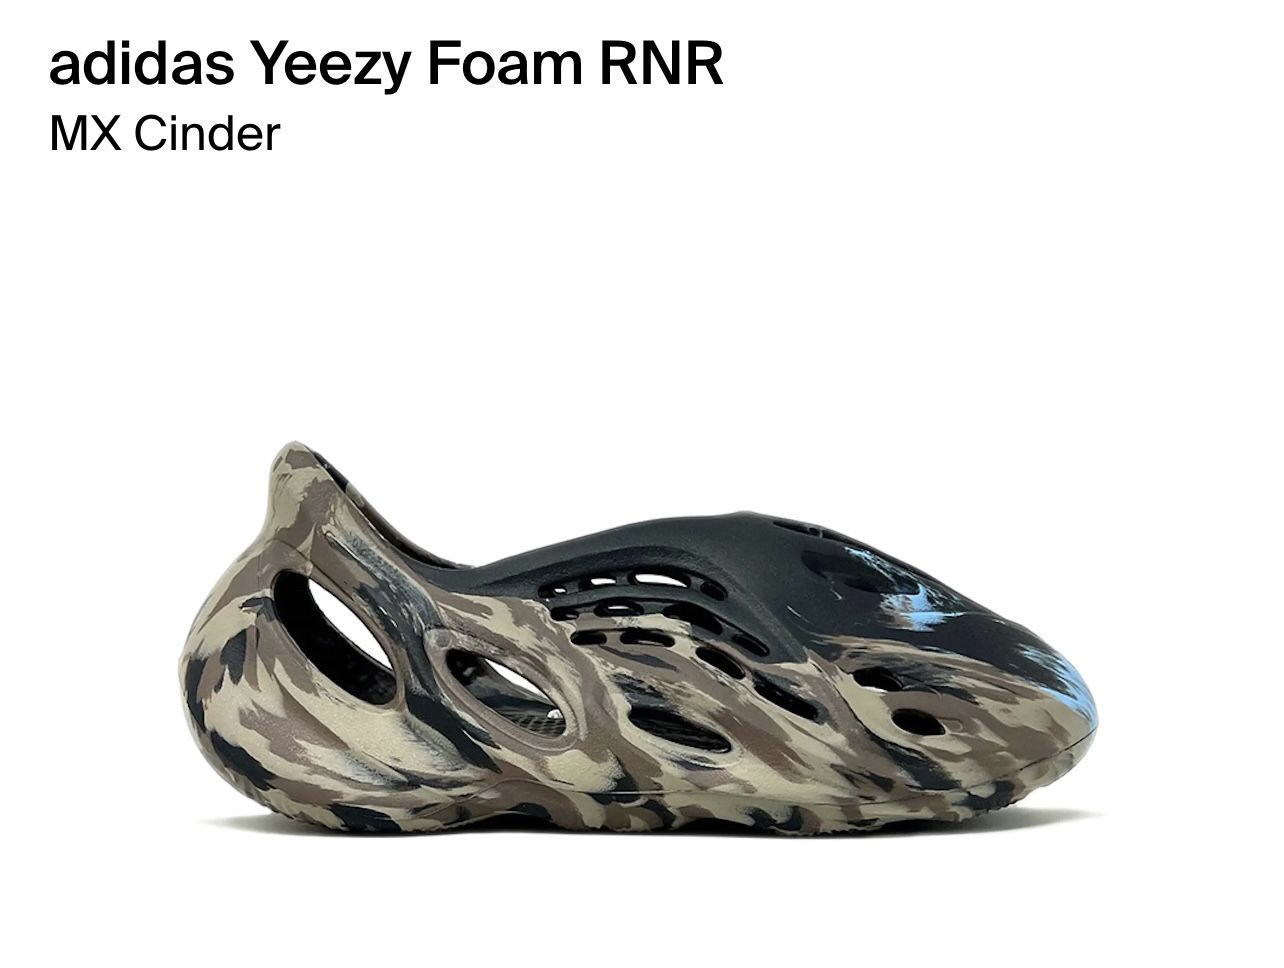 Adidas Yeezy Foam Runner MX Cinder